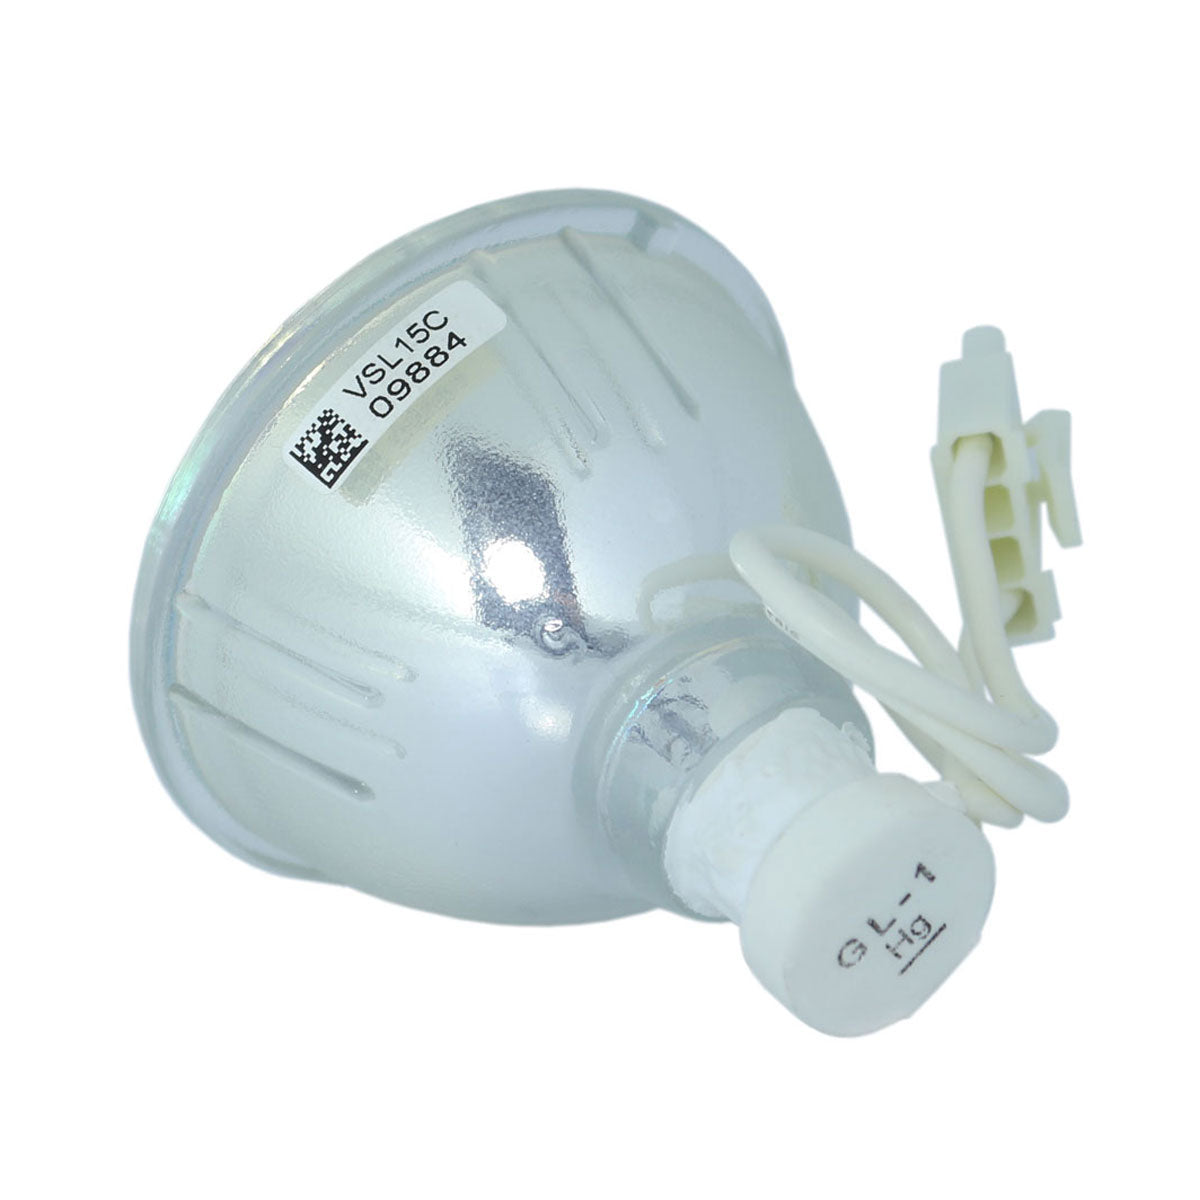 Proxima LAMP-009 Phoenix Projector Bare Lamp